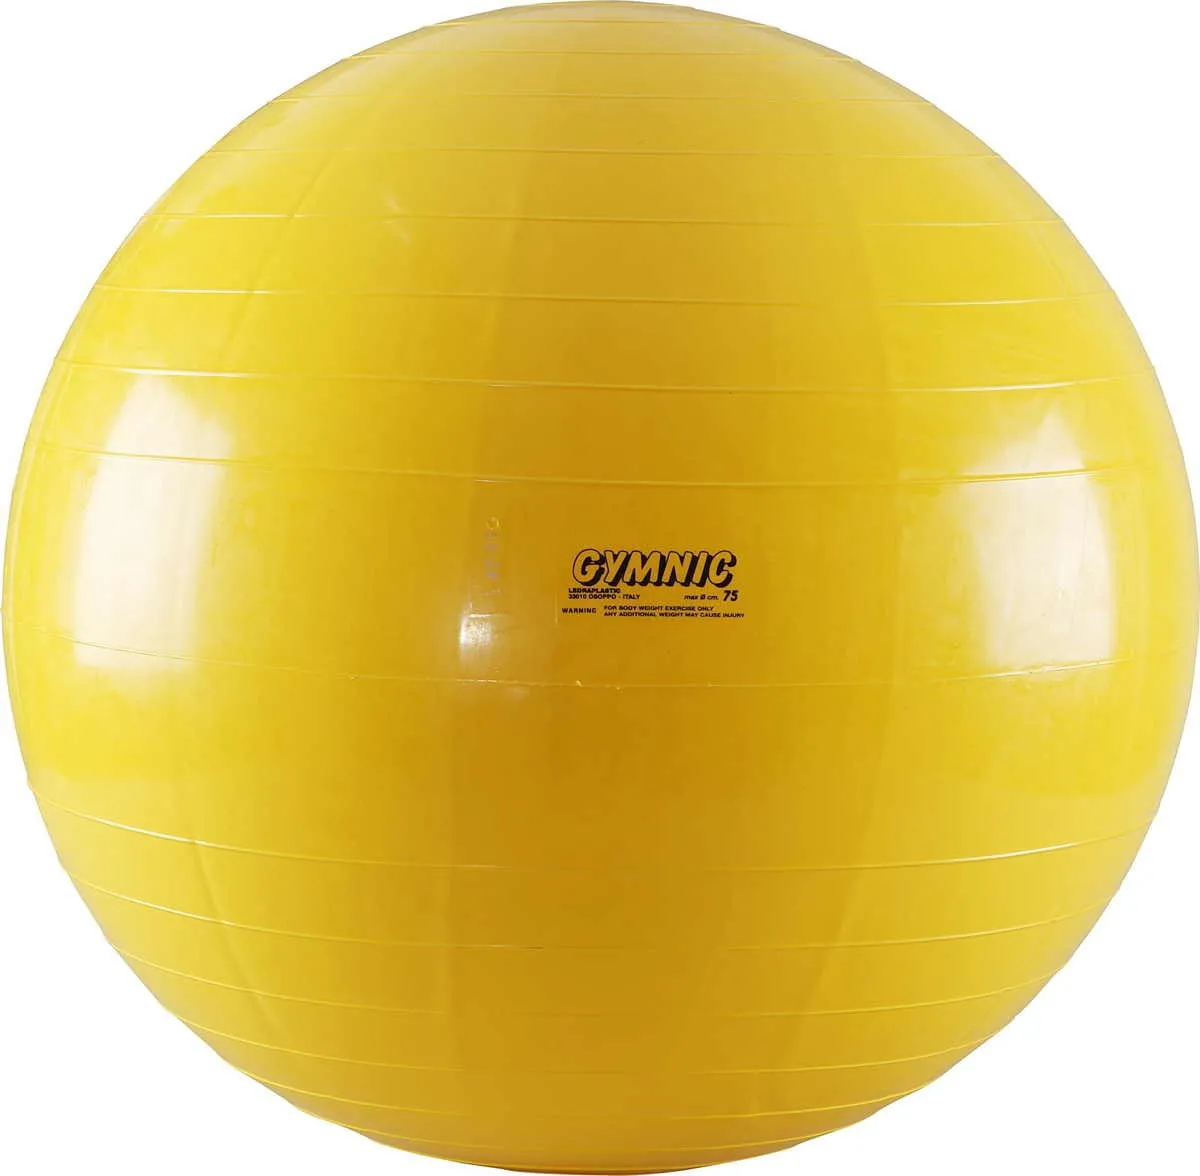 Gymnastics, yoga and sitting ball diameter 75 cm, yellow